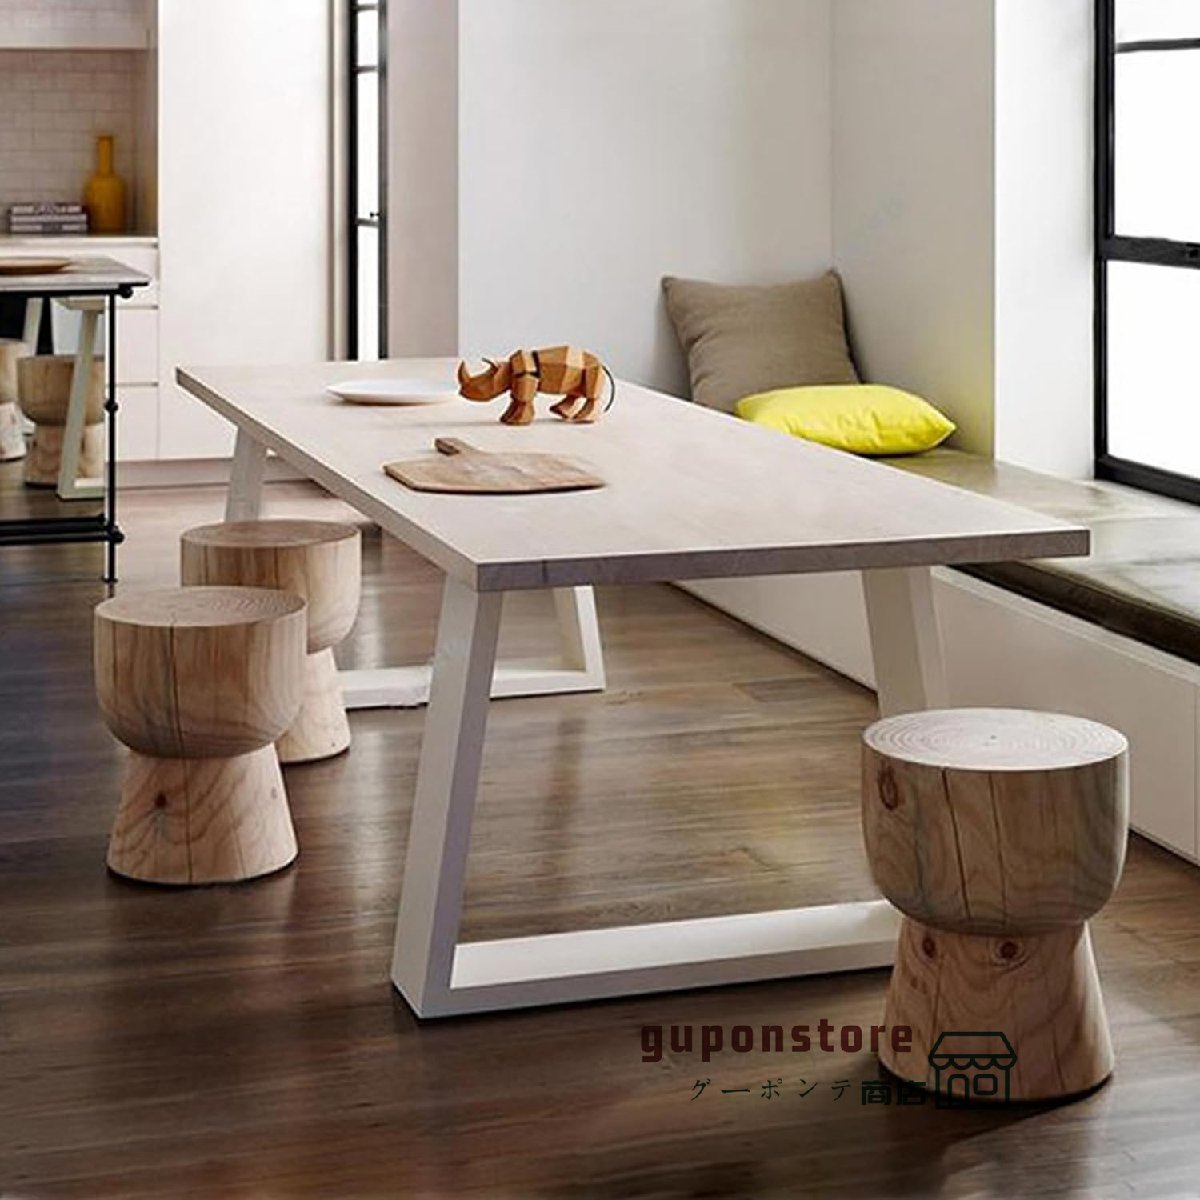  stool wooden stylish Mini stool klieitib home use multifunction chair sofa side living room coffee table. stool 